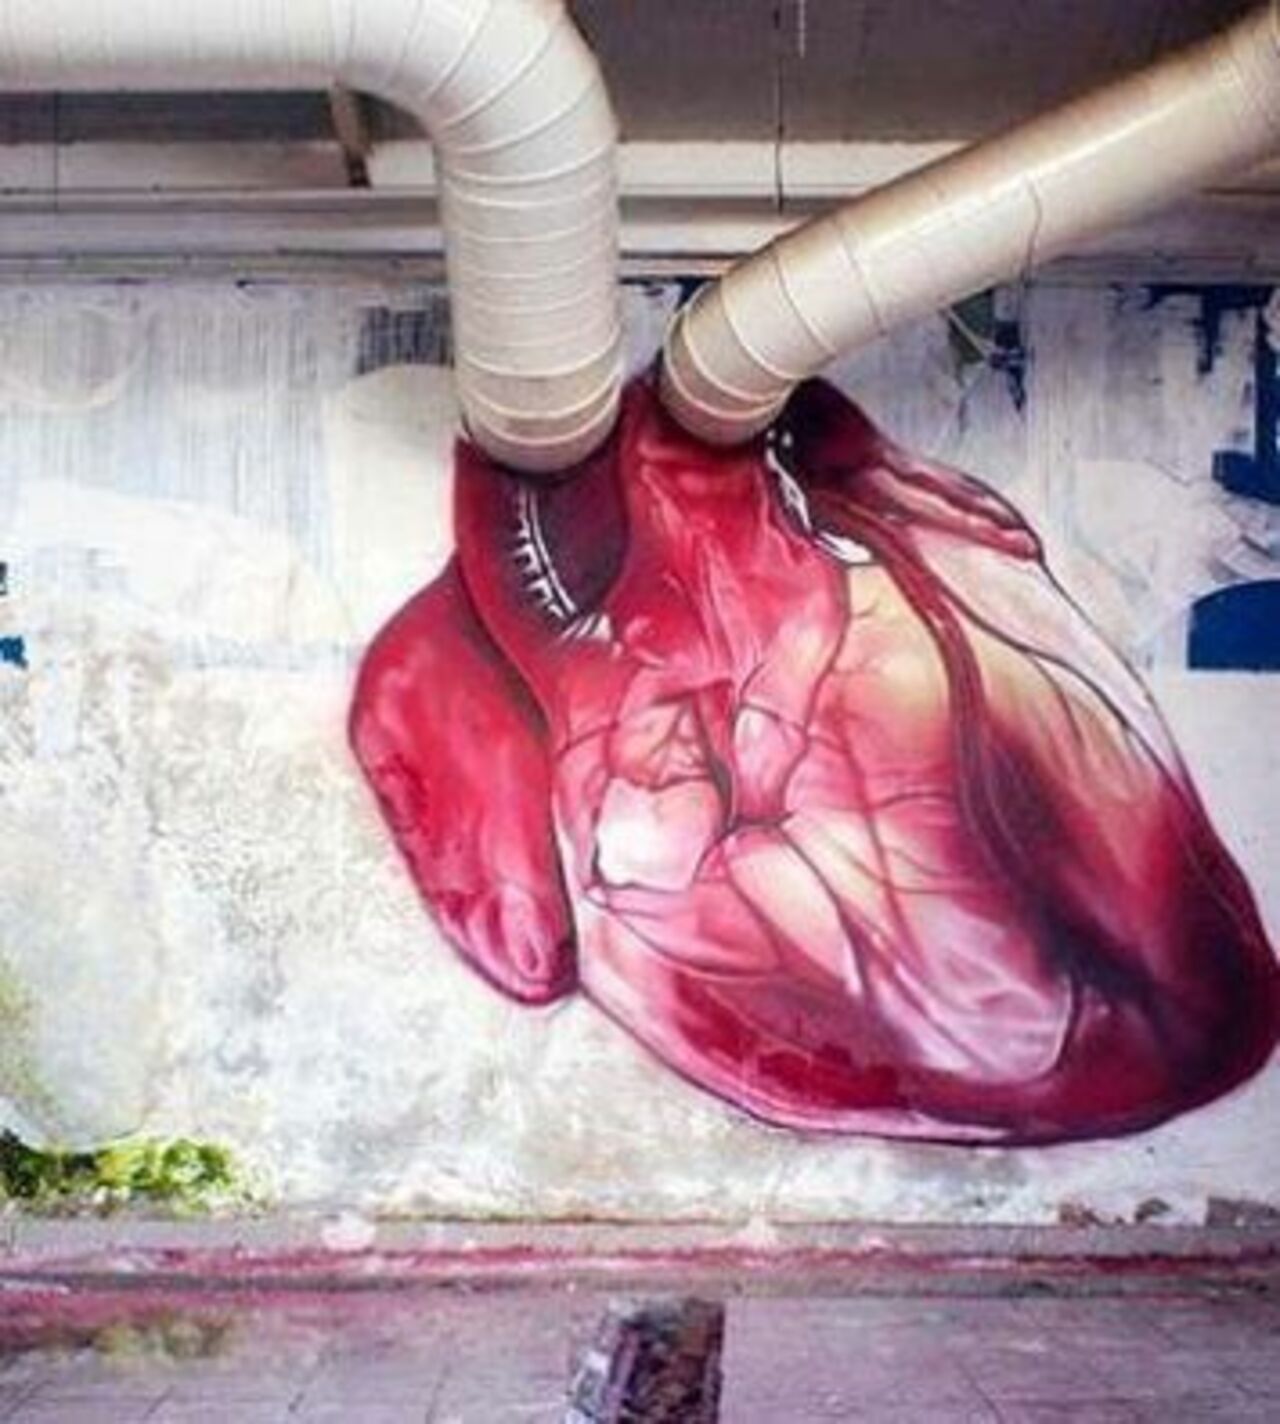 #Heart – Creative #Streetart | Be ▲rtist - Be ▲rt https://beartistbeart.com/2016/08/22/heart-creative-streetart/?utm_campaign=crowdfire&utm_content=crowdfire&utm_medium=social&utm_source=twitter https://t.co/BqigkD5kYs